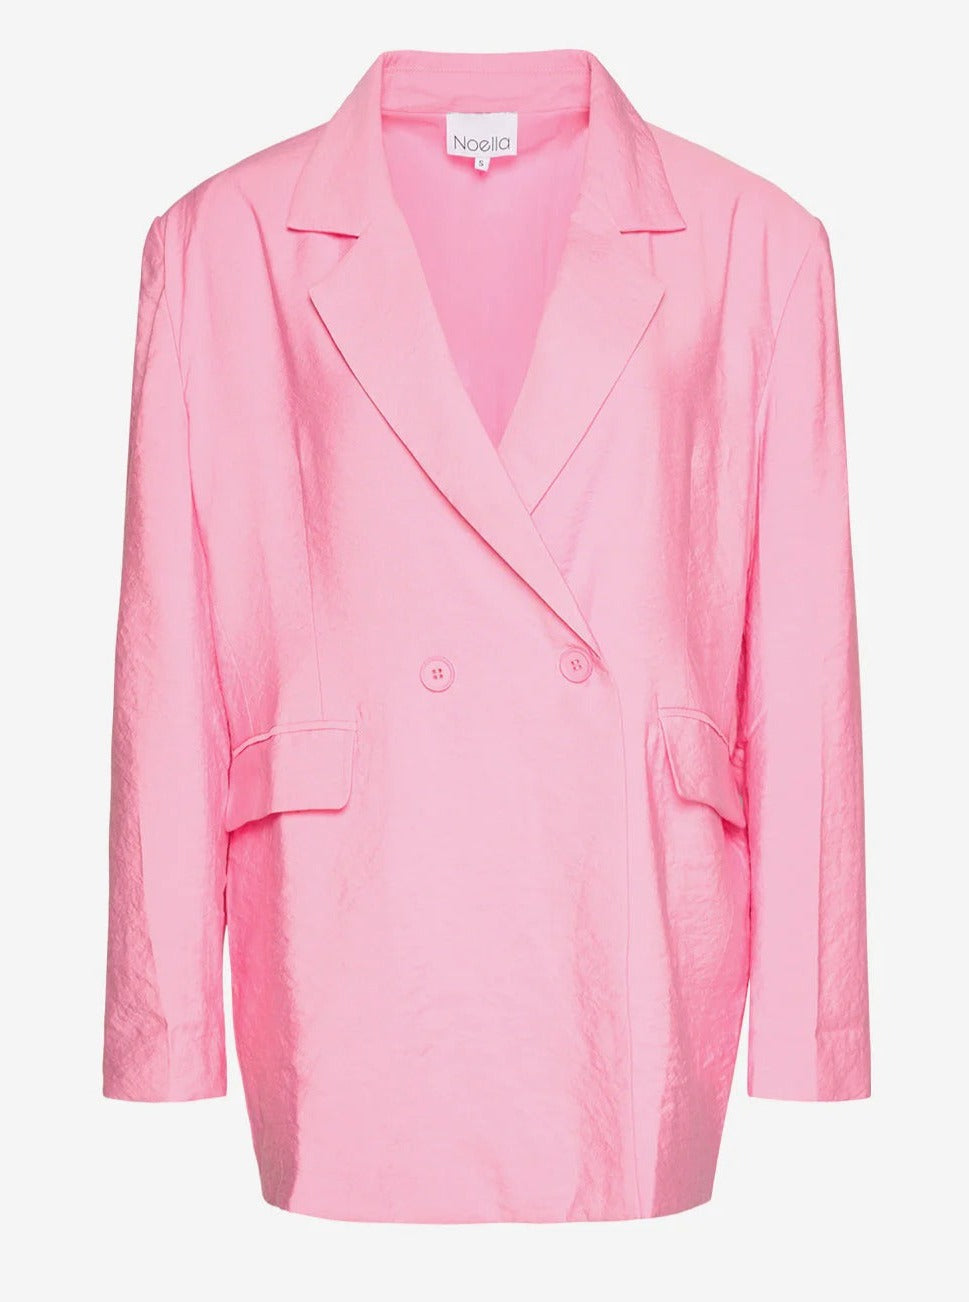 Mika Oversize blazer Candy pink